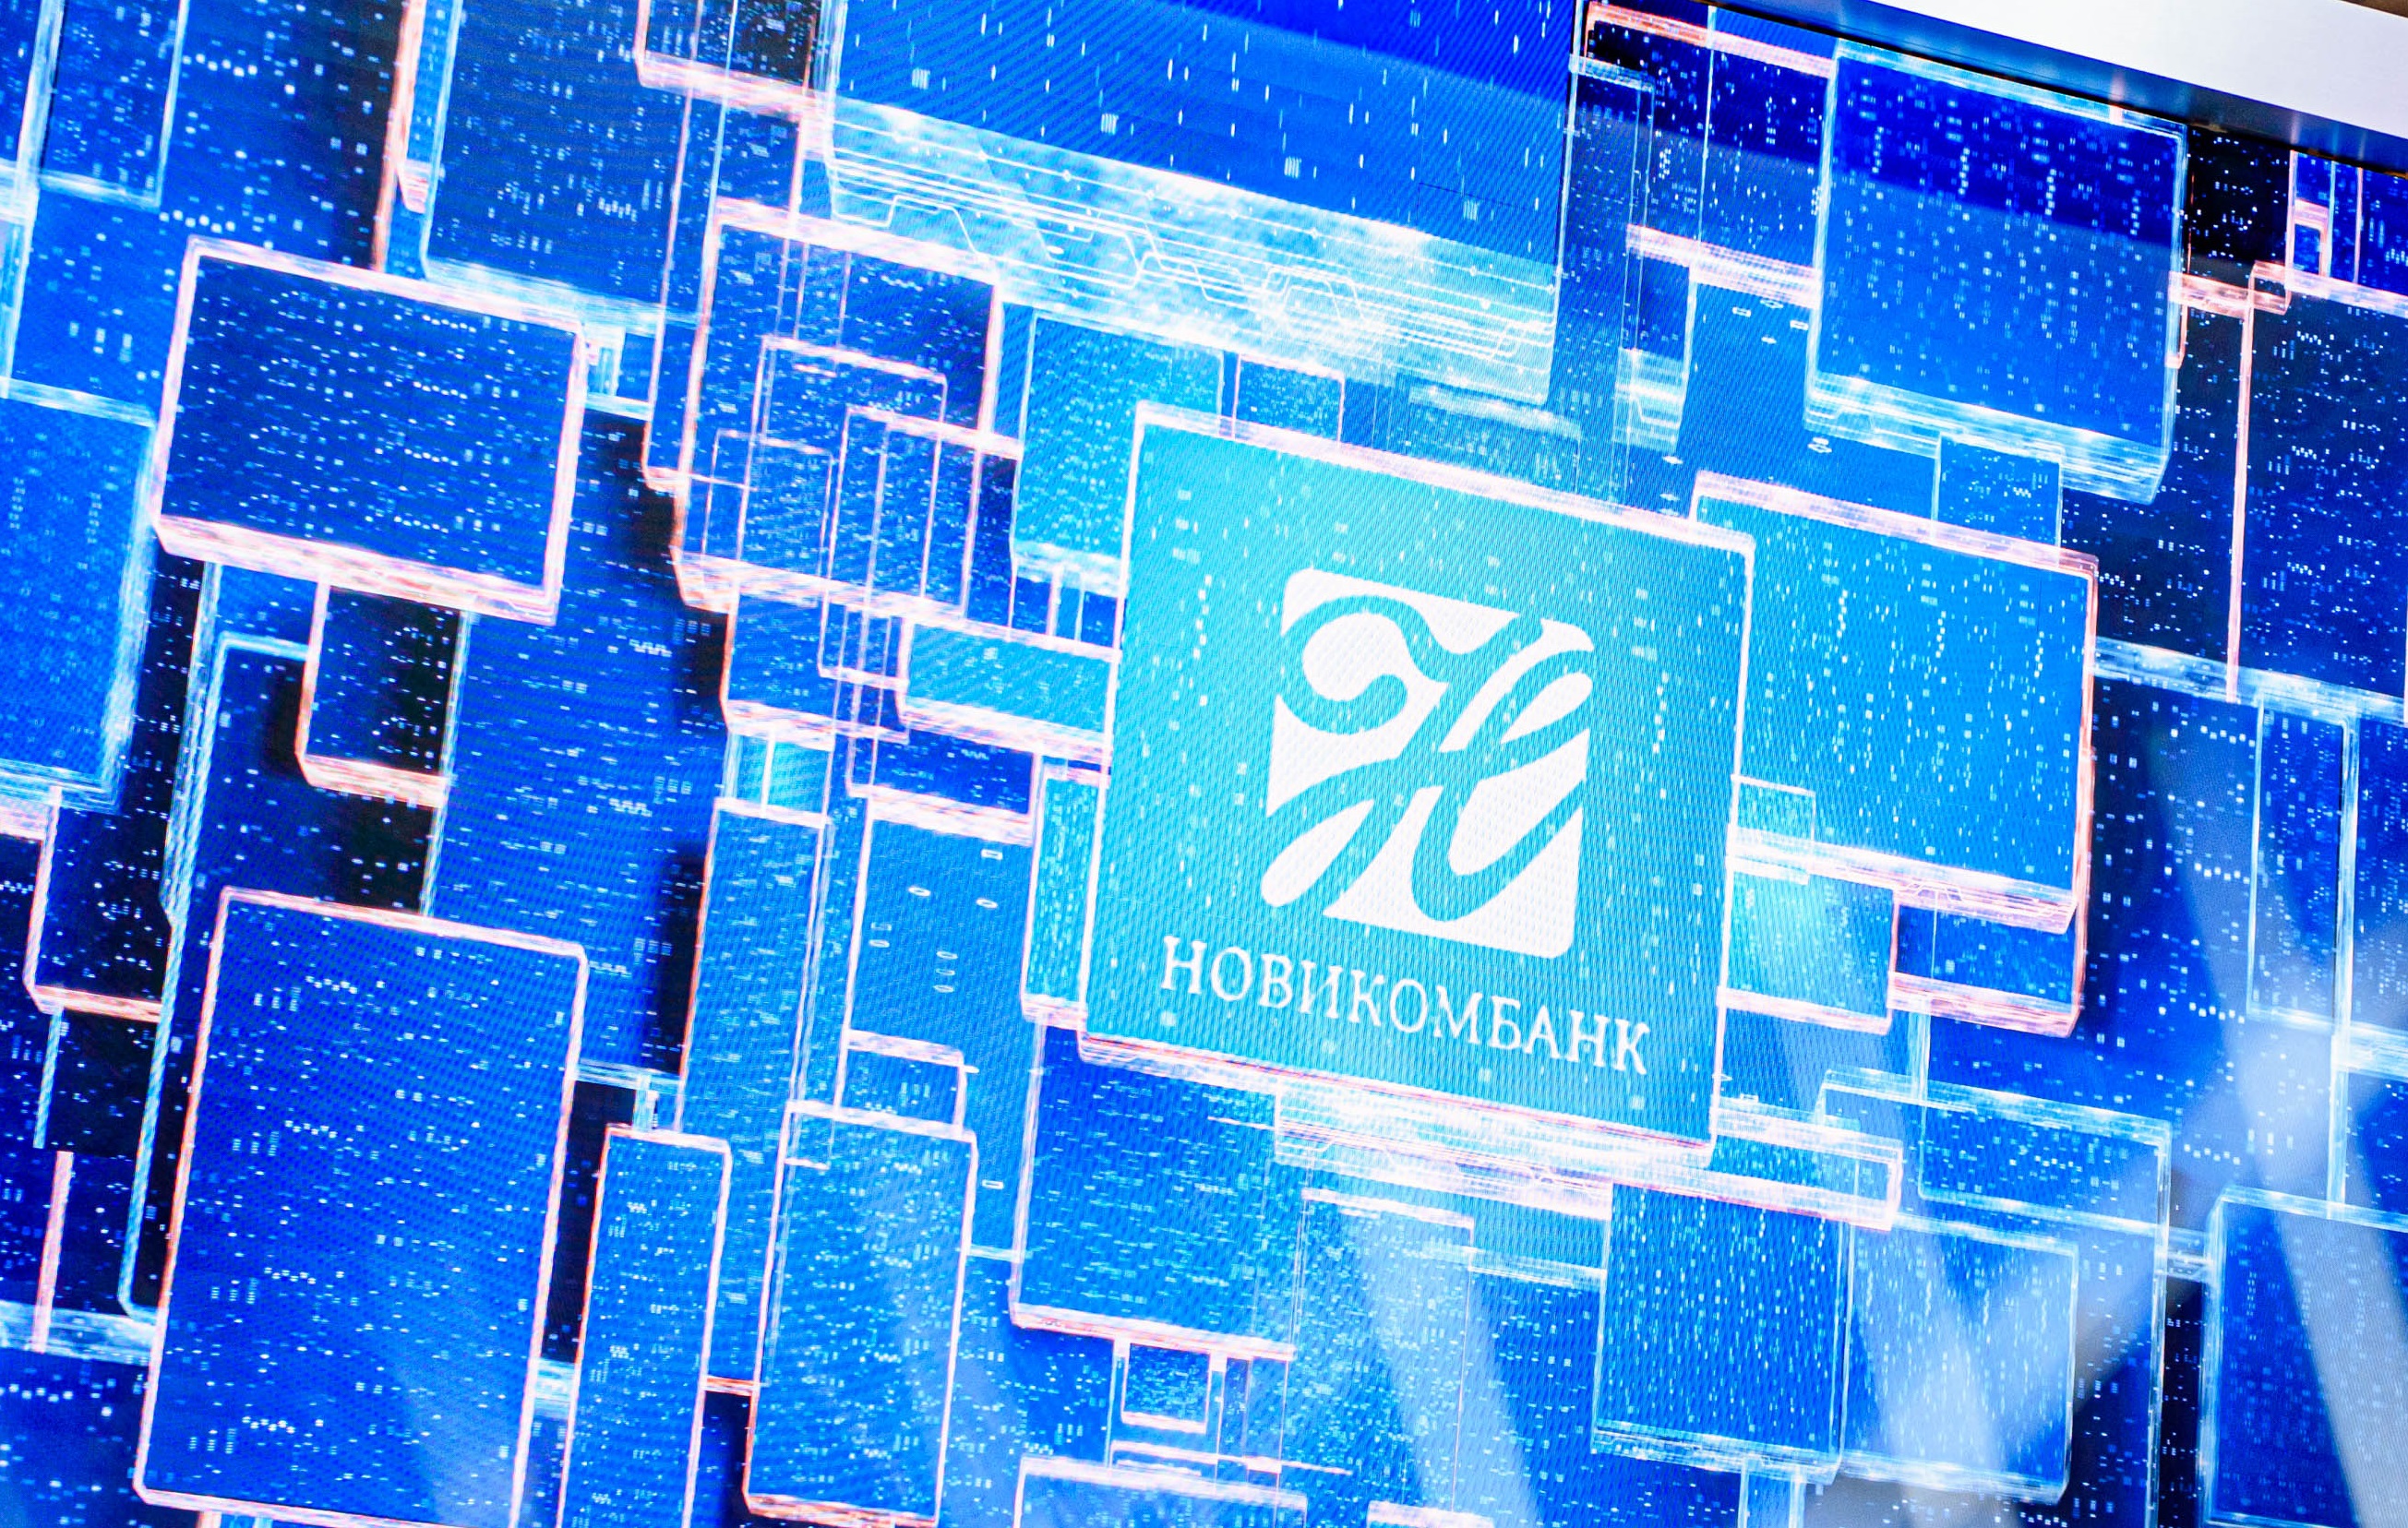 Новикомбанк предоставил КАМАЗу банковские гарантии на 15 млрд рублей